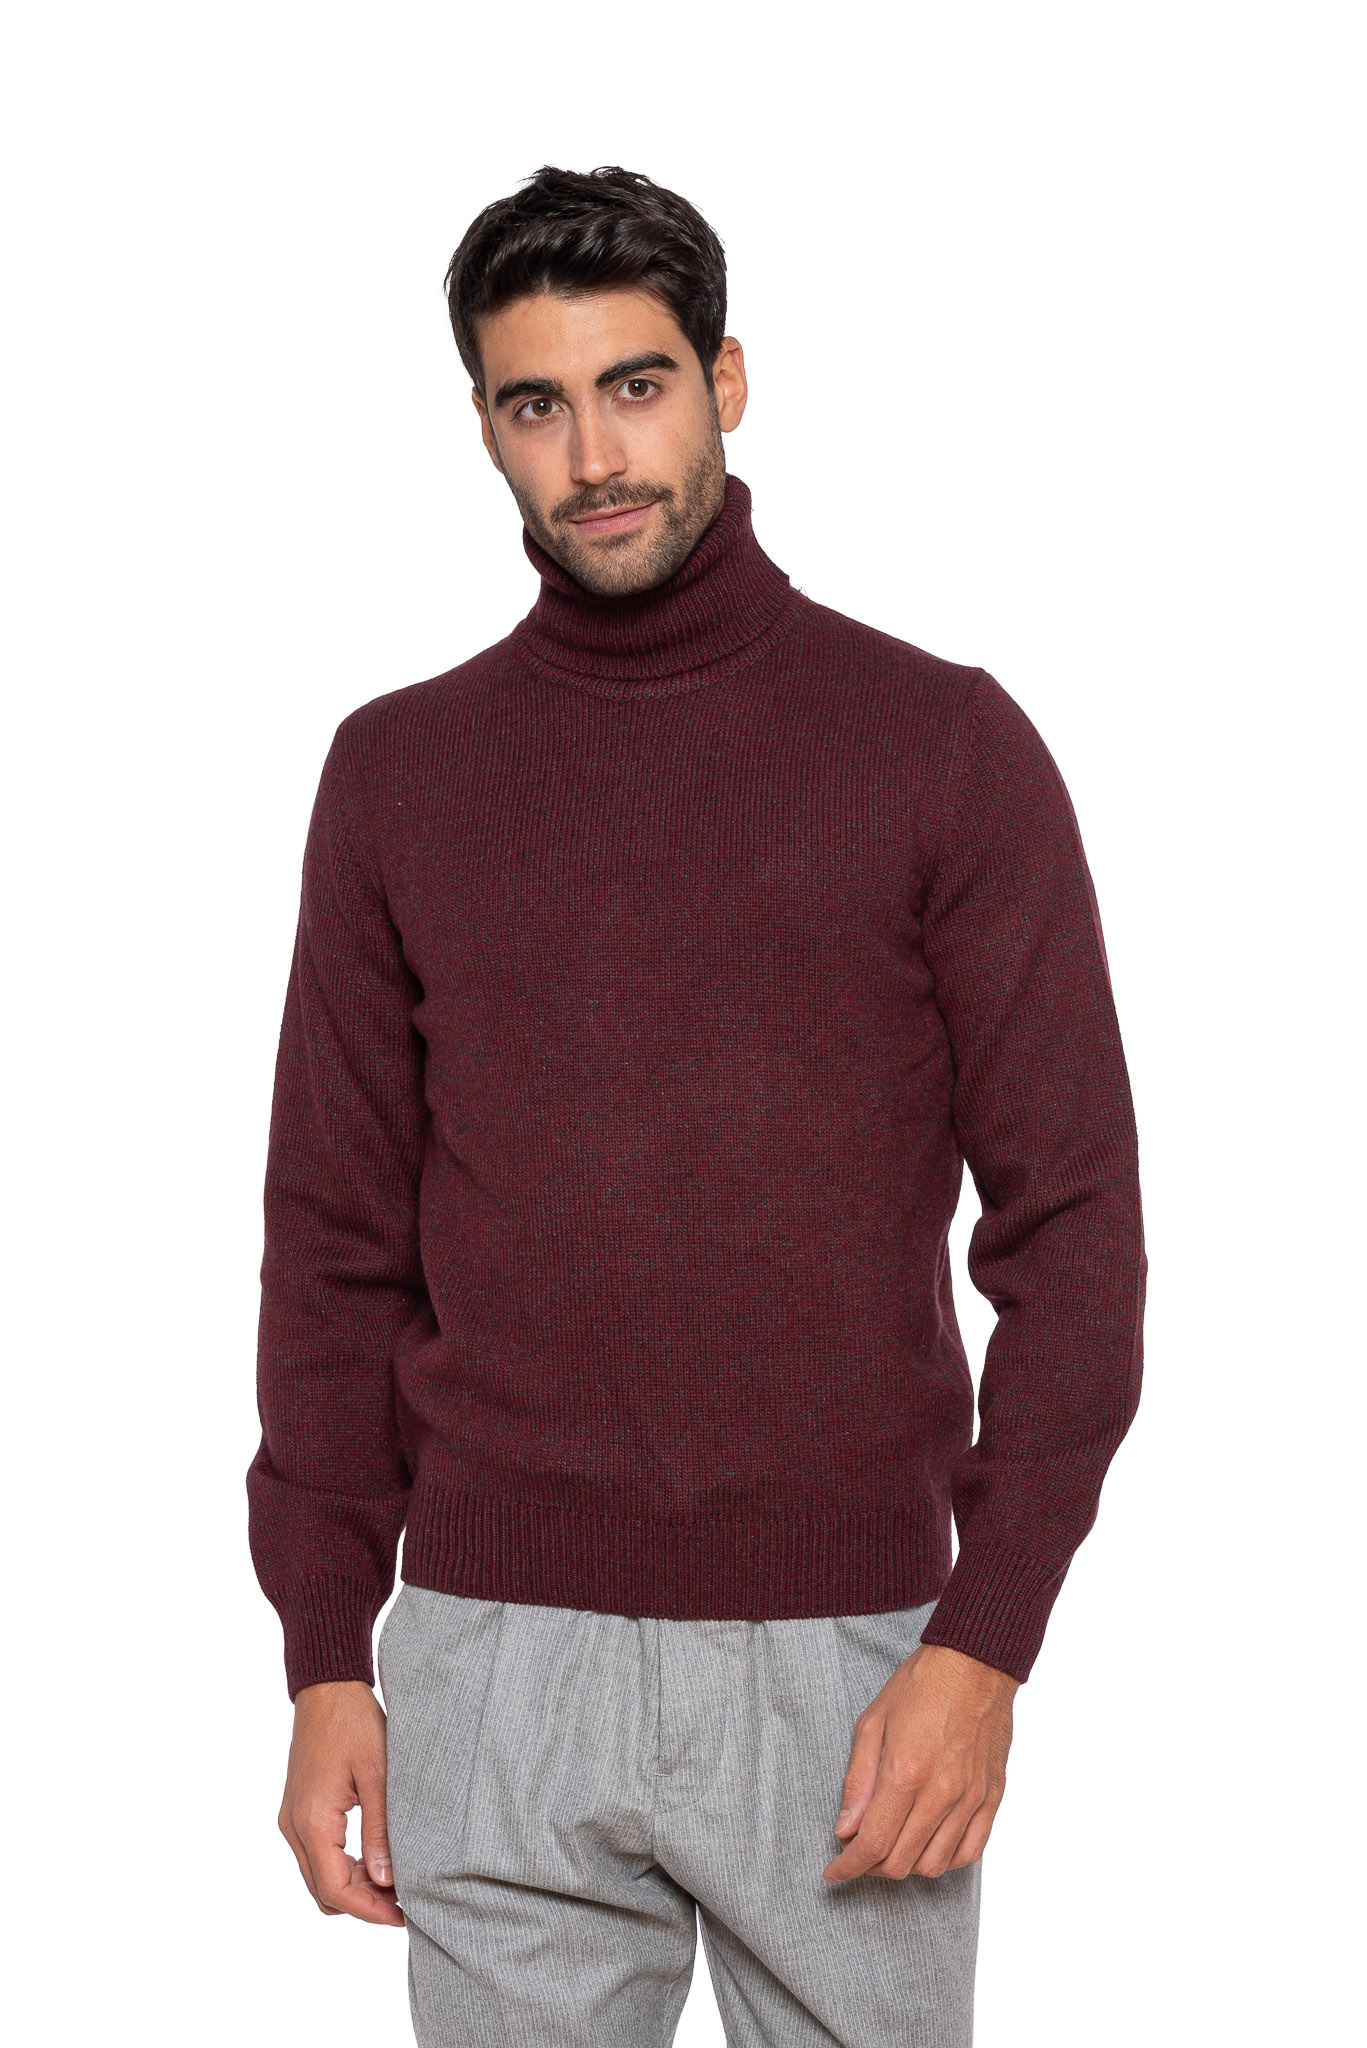 $950 UMBERTO BILANCIONI Casual Chic Burgundy Thick Sweater Turtleneck ...